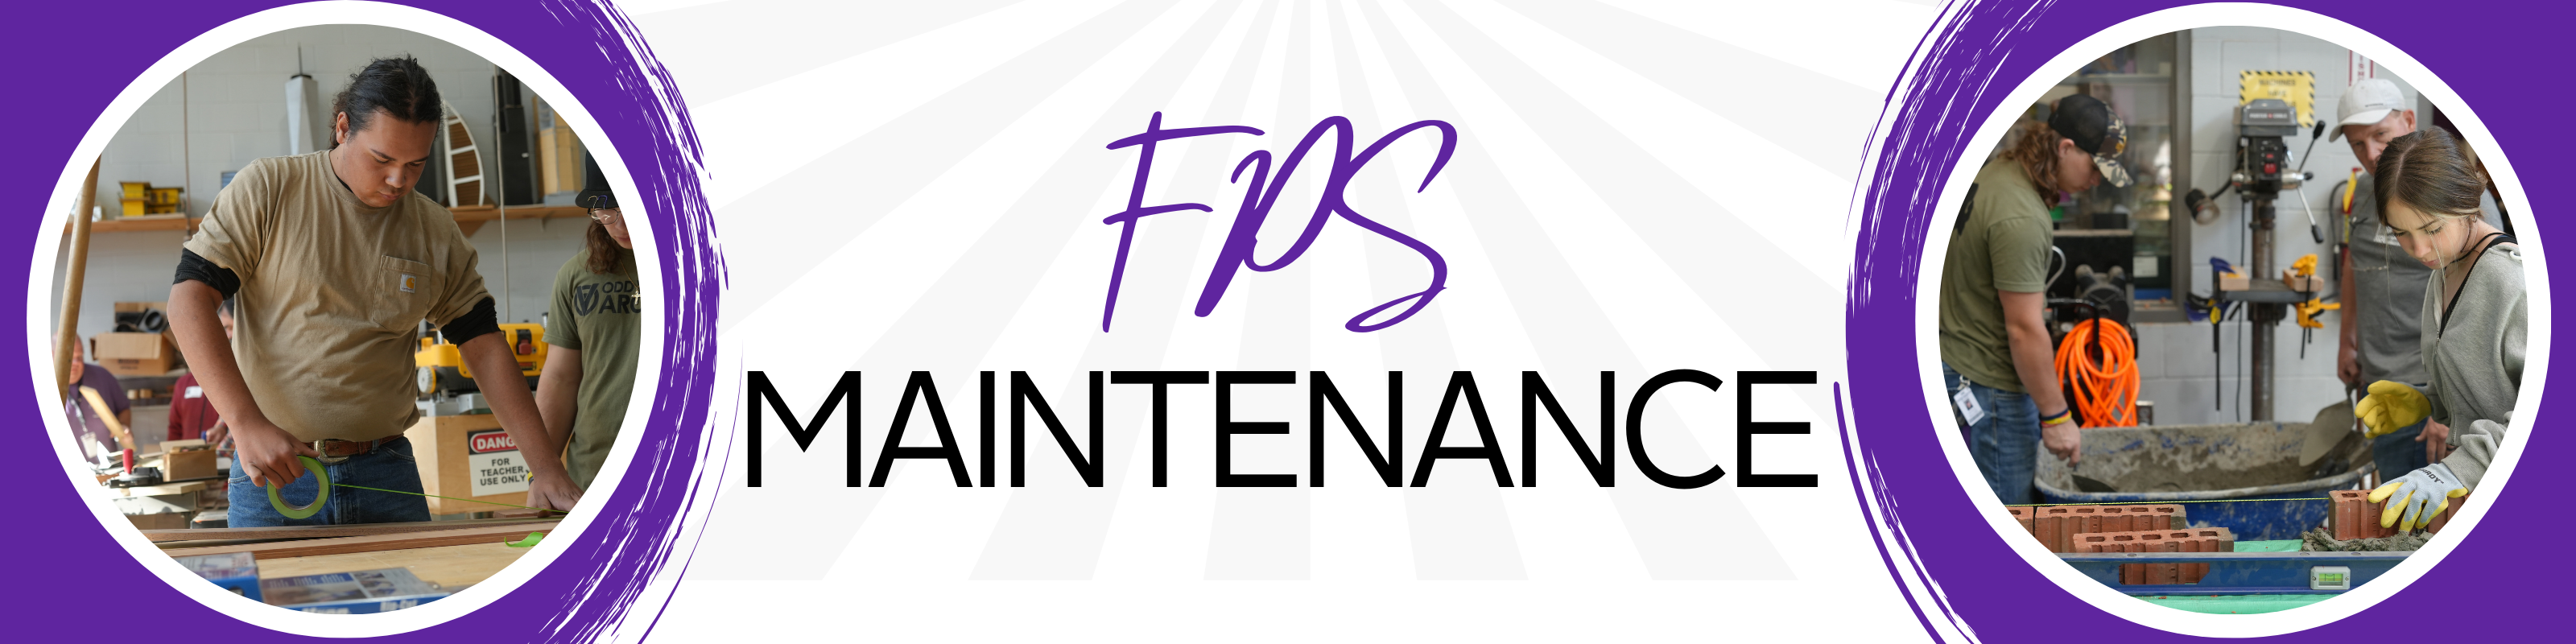 FPS Maintenance